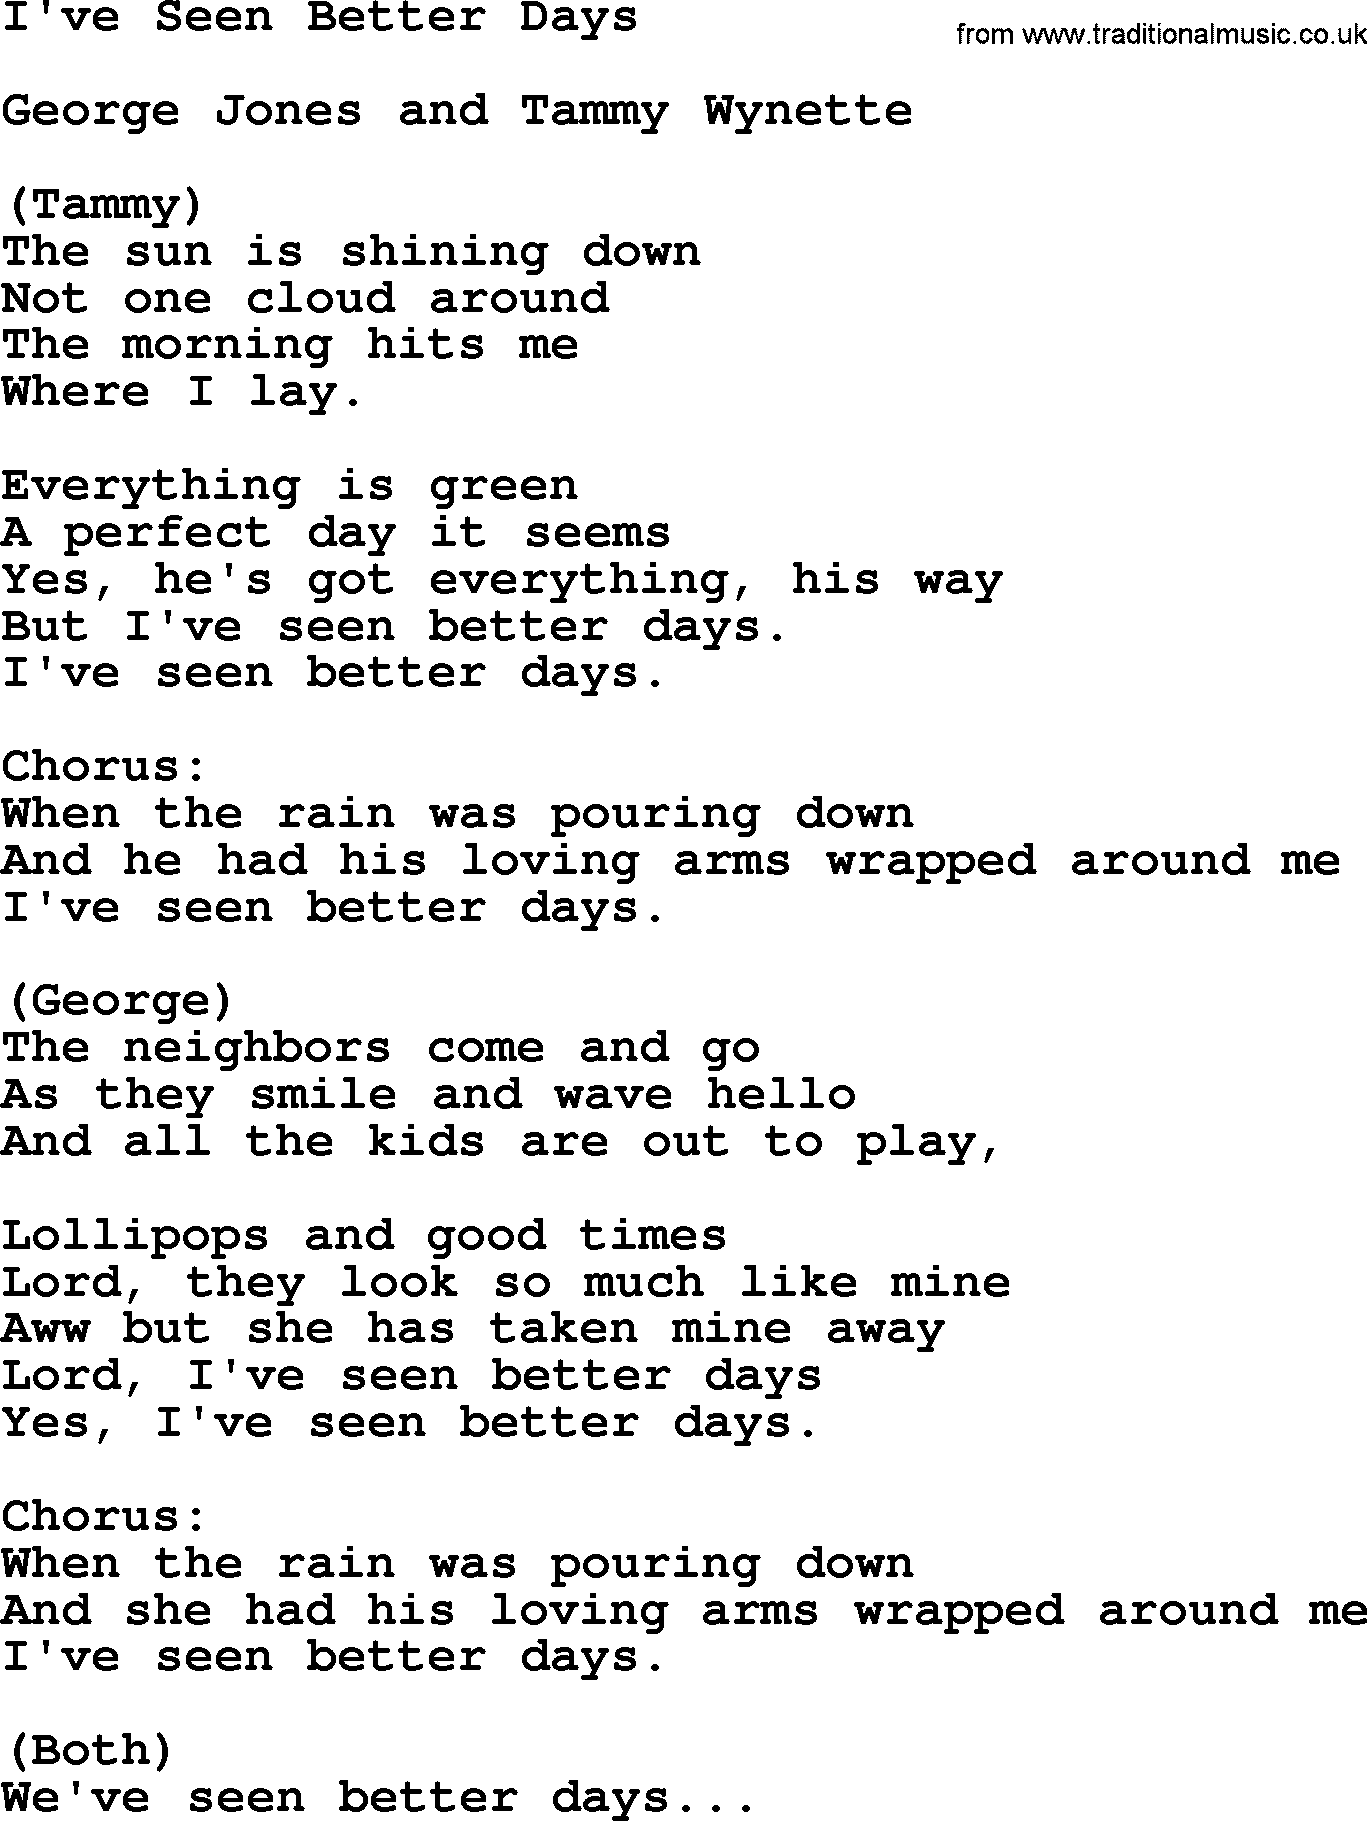 George Jones song: I've Seen Better Days, lyrics